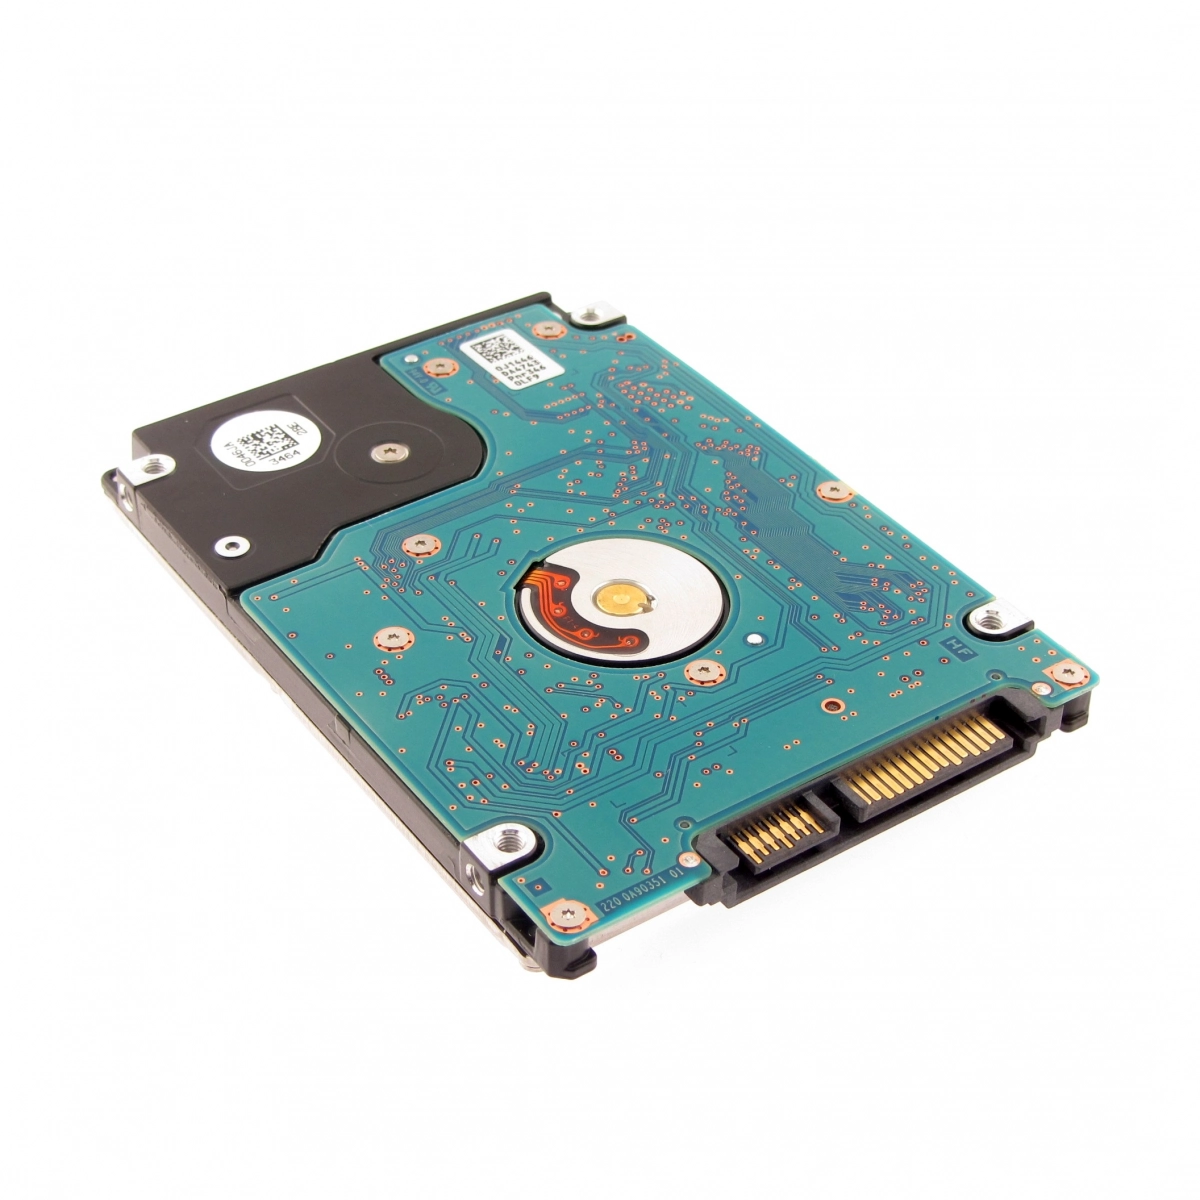 Notebook-Festplatte 1TB, 5400rpm, 128MB für FUJITSU LifeBook S752